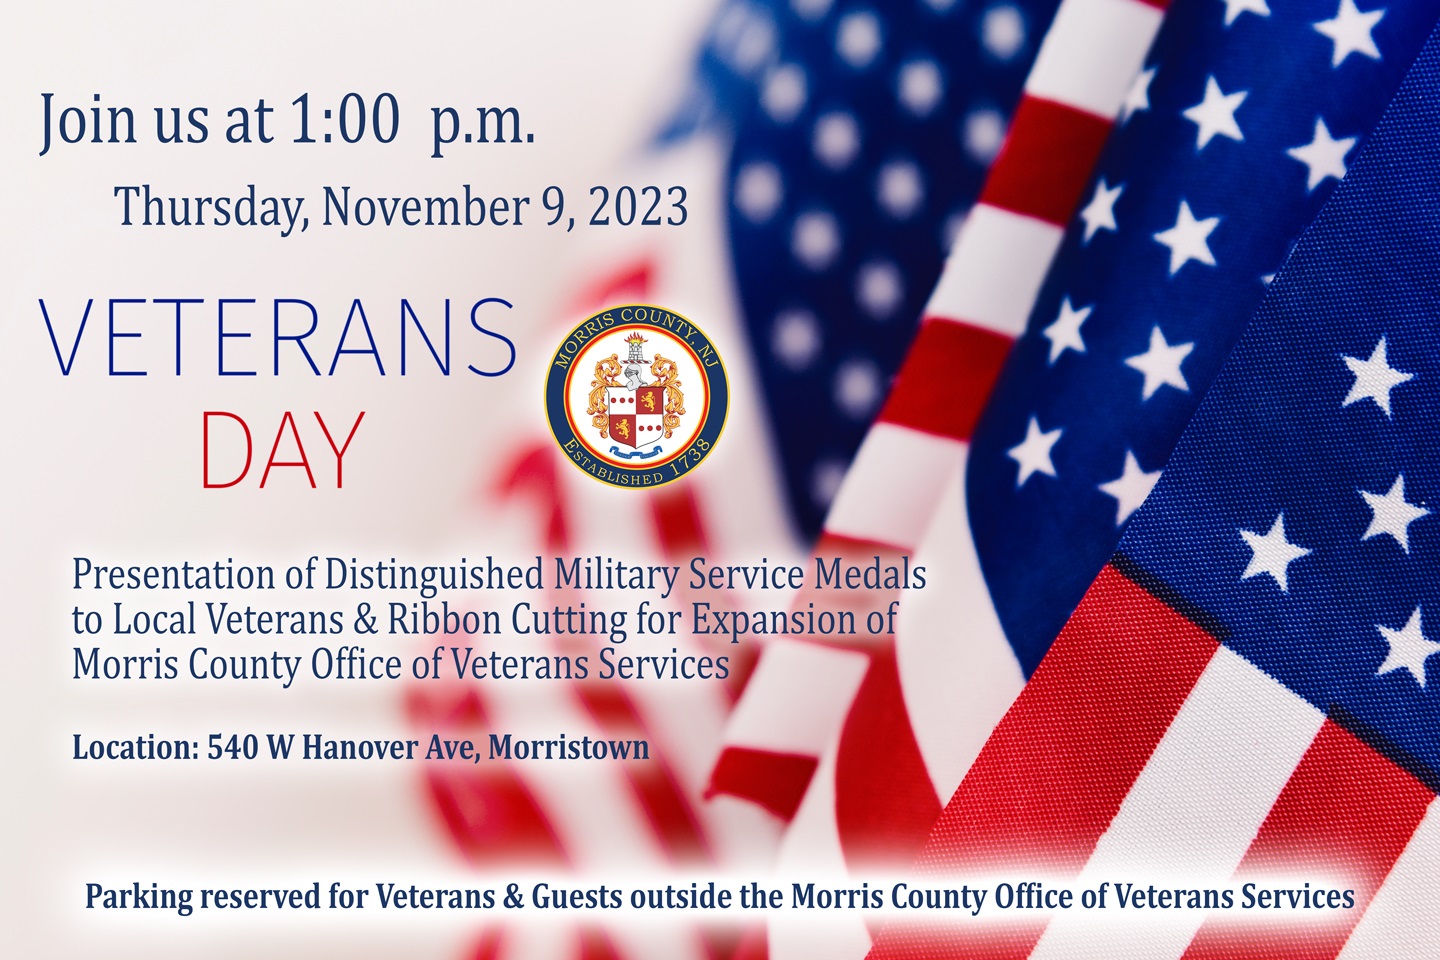 2023-11-09-Veterans-Day-Invite.jpg